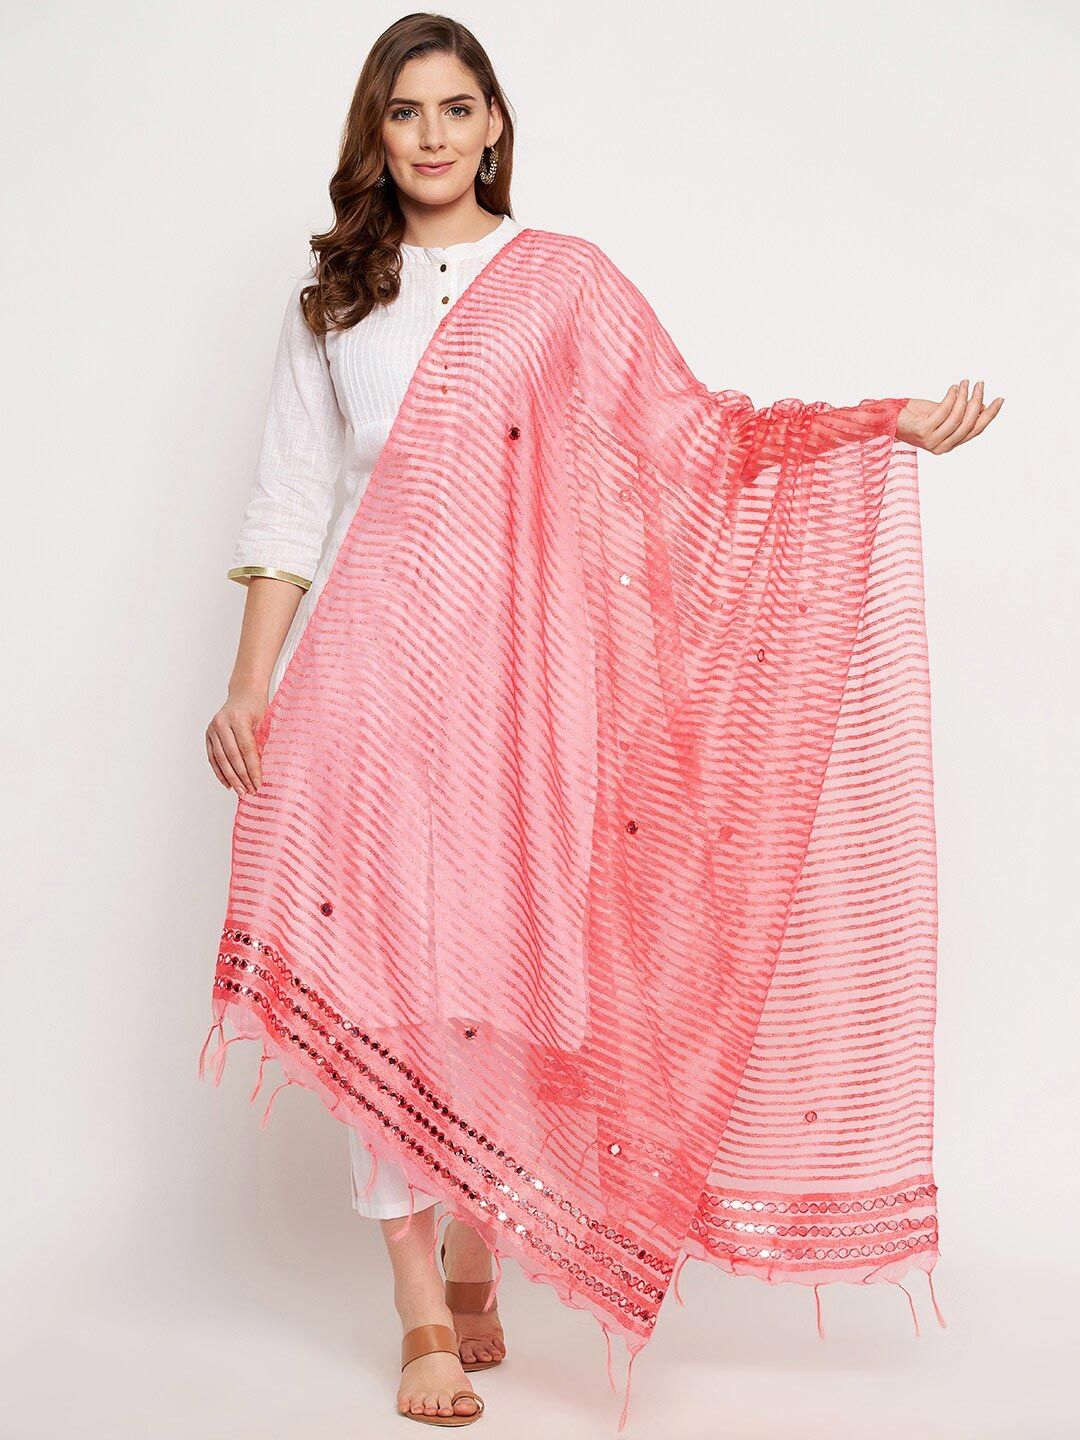 Clora Creation Pink Striped Organza Dupatta with Mirror Work Price in India